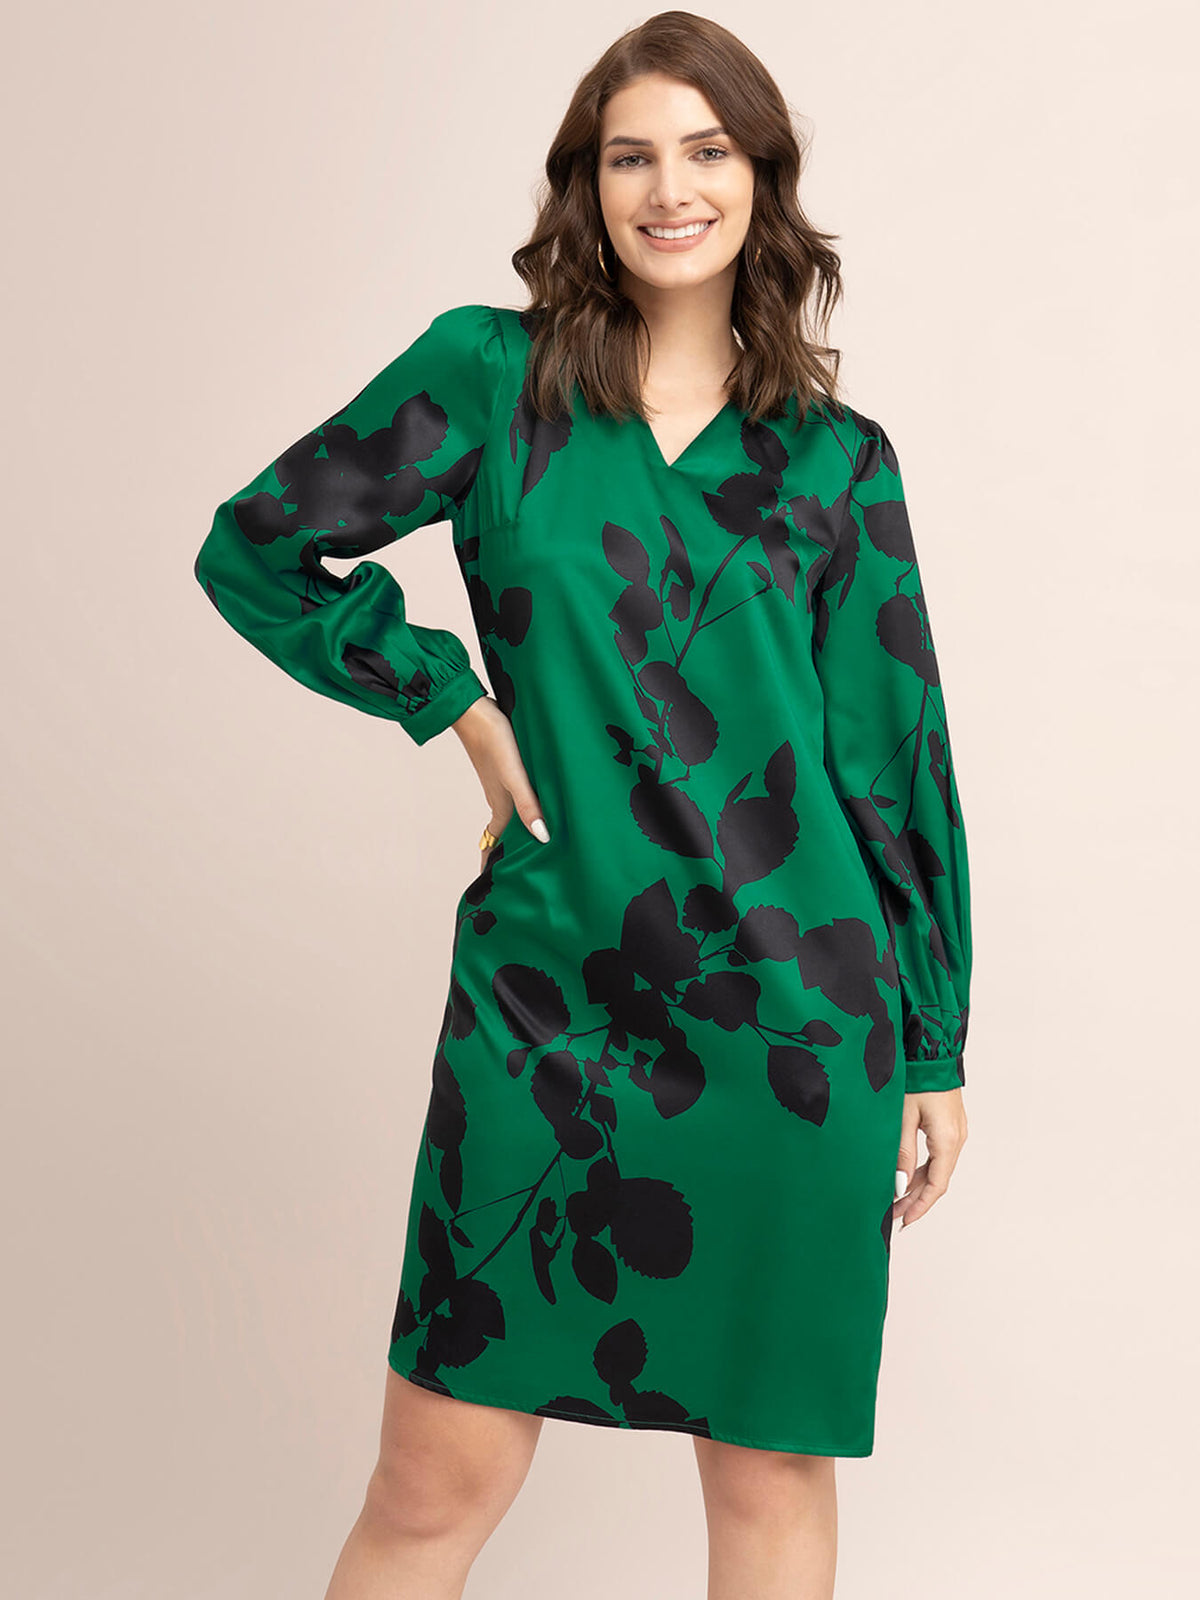 Satin Floral Print Shift Dress - Green And Black